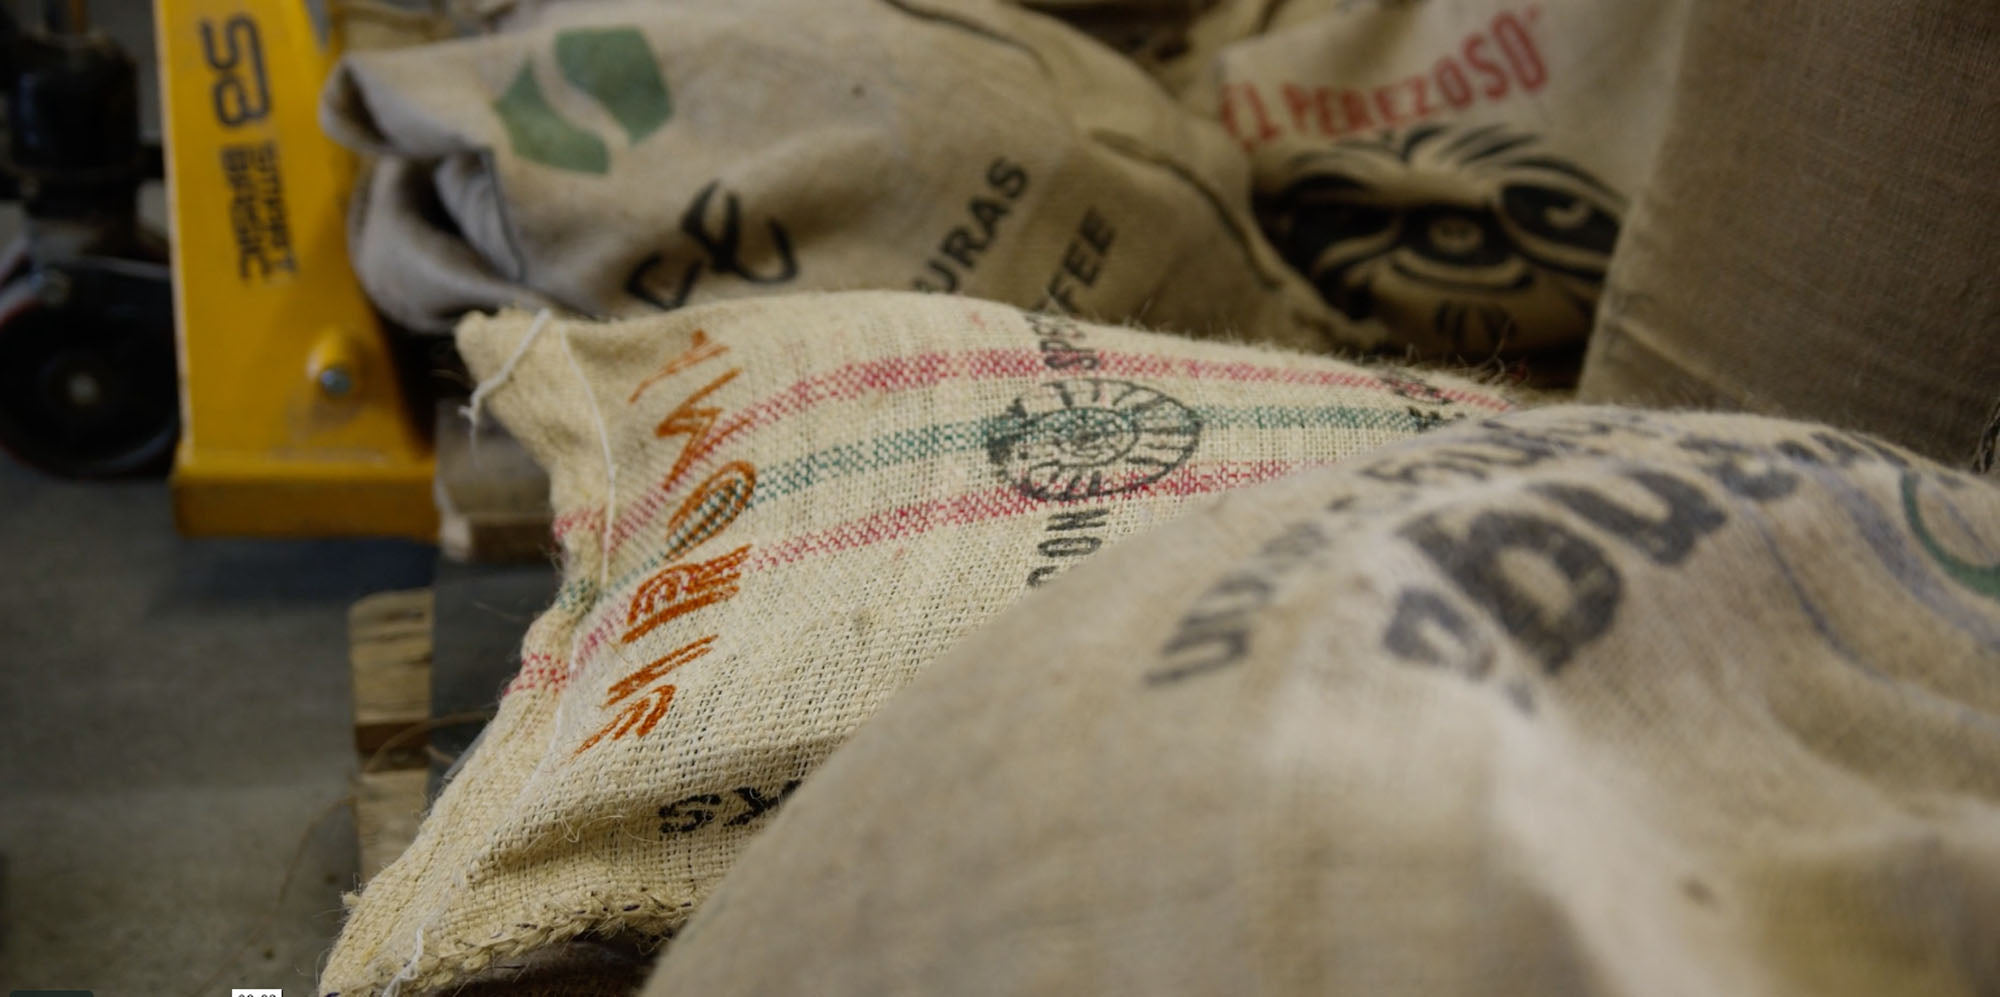 Coffee sacks in a warehouse setting